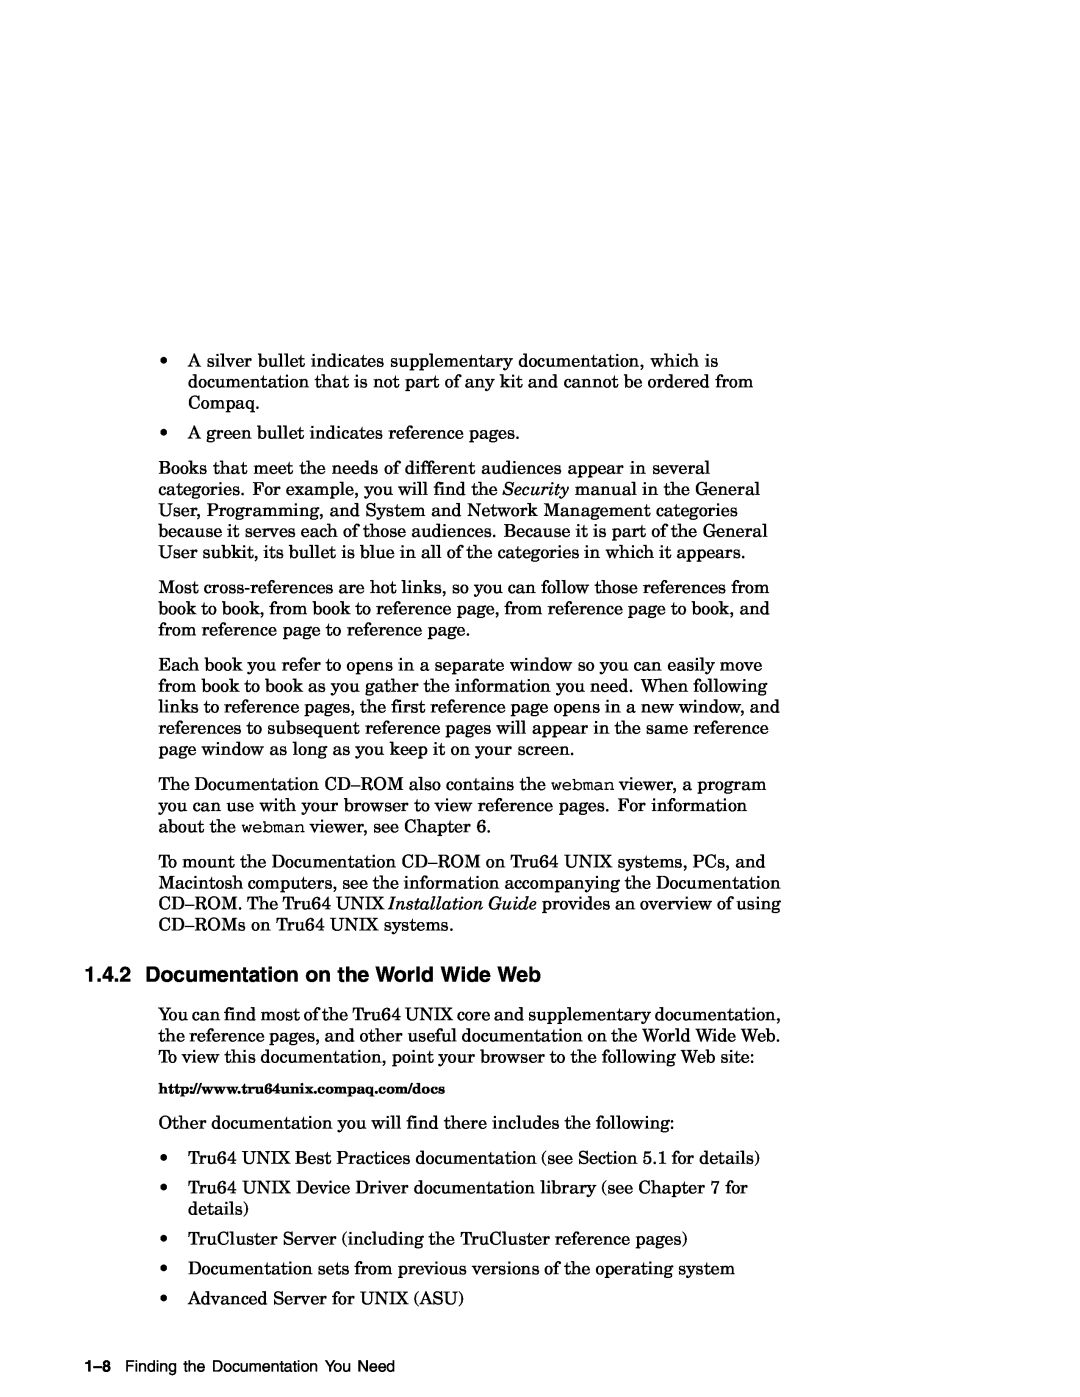 Compaq AA-RH8RD-TE manual Documentation on the World Wide Web 